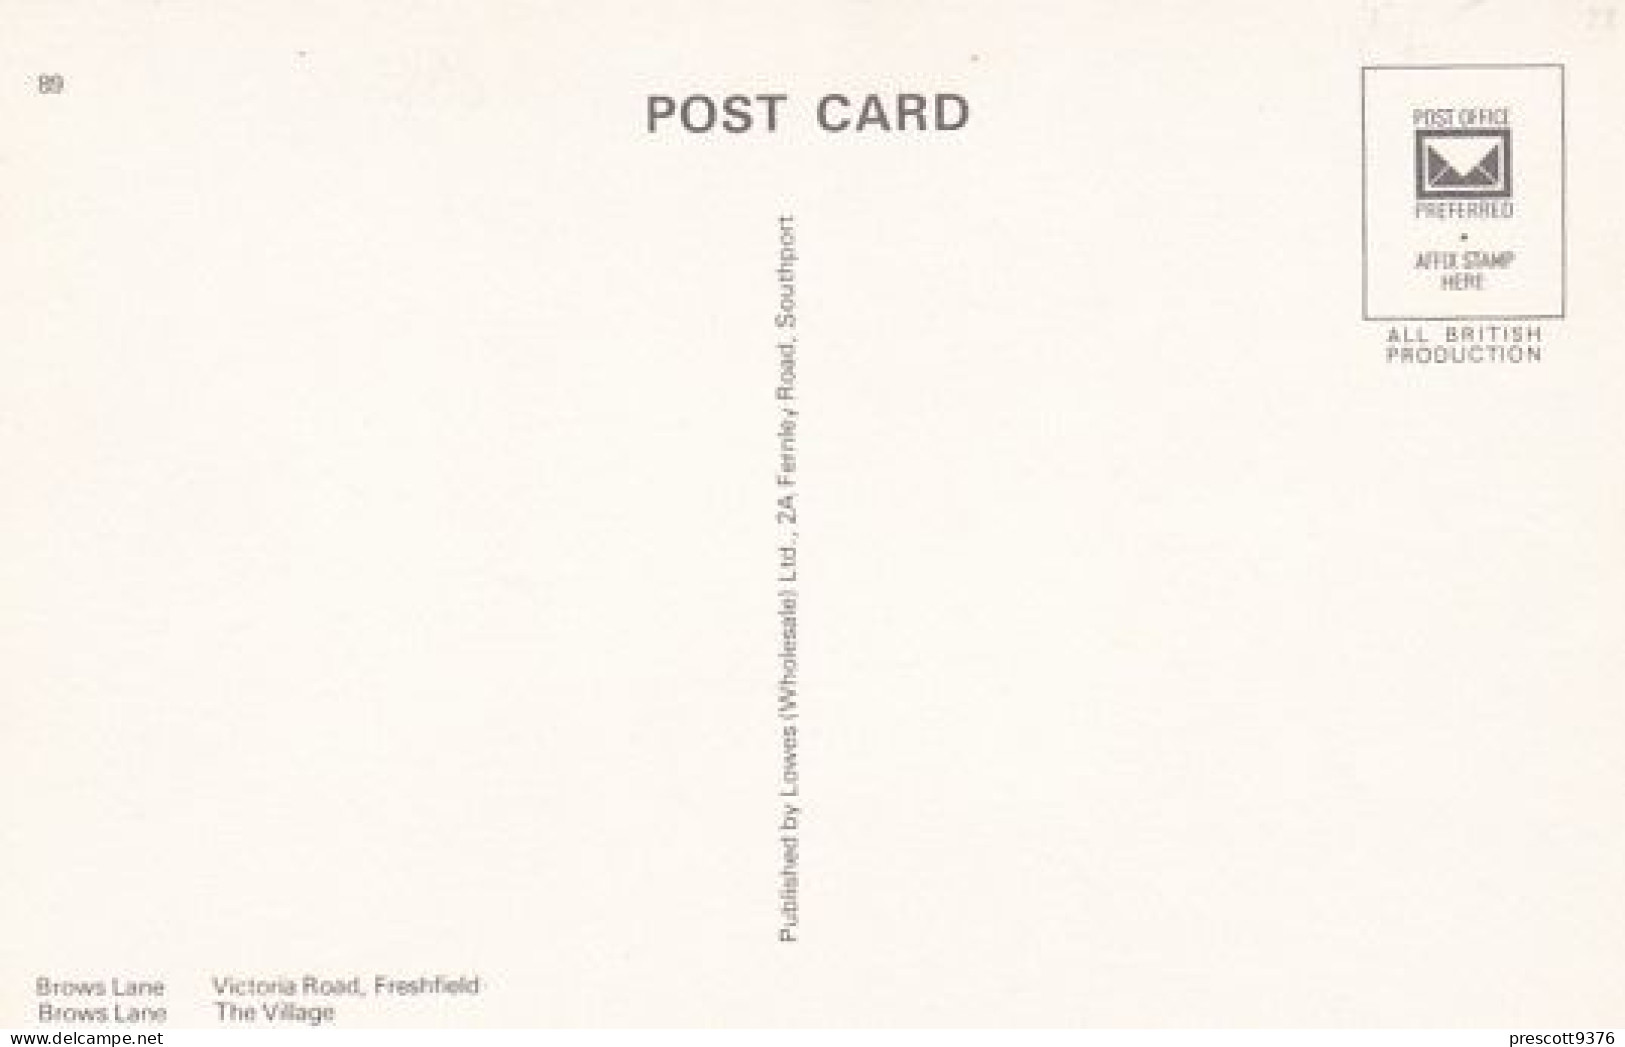 Formby Multiview  - Lancashire - Unused Postcard - Lan1 - Manchester